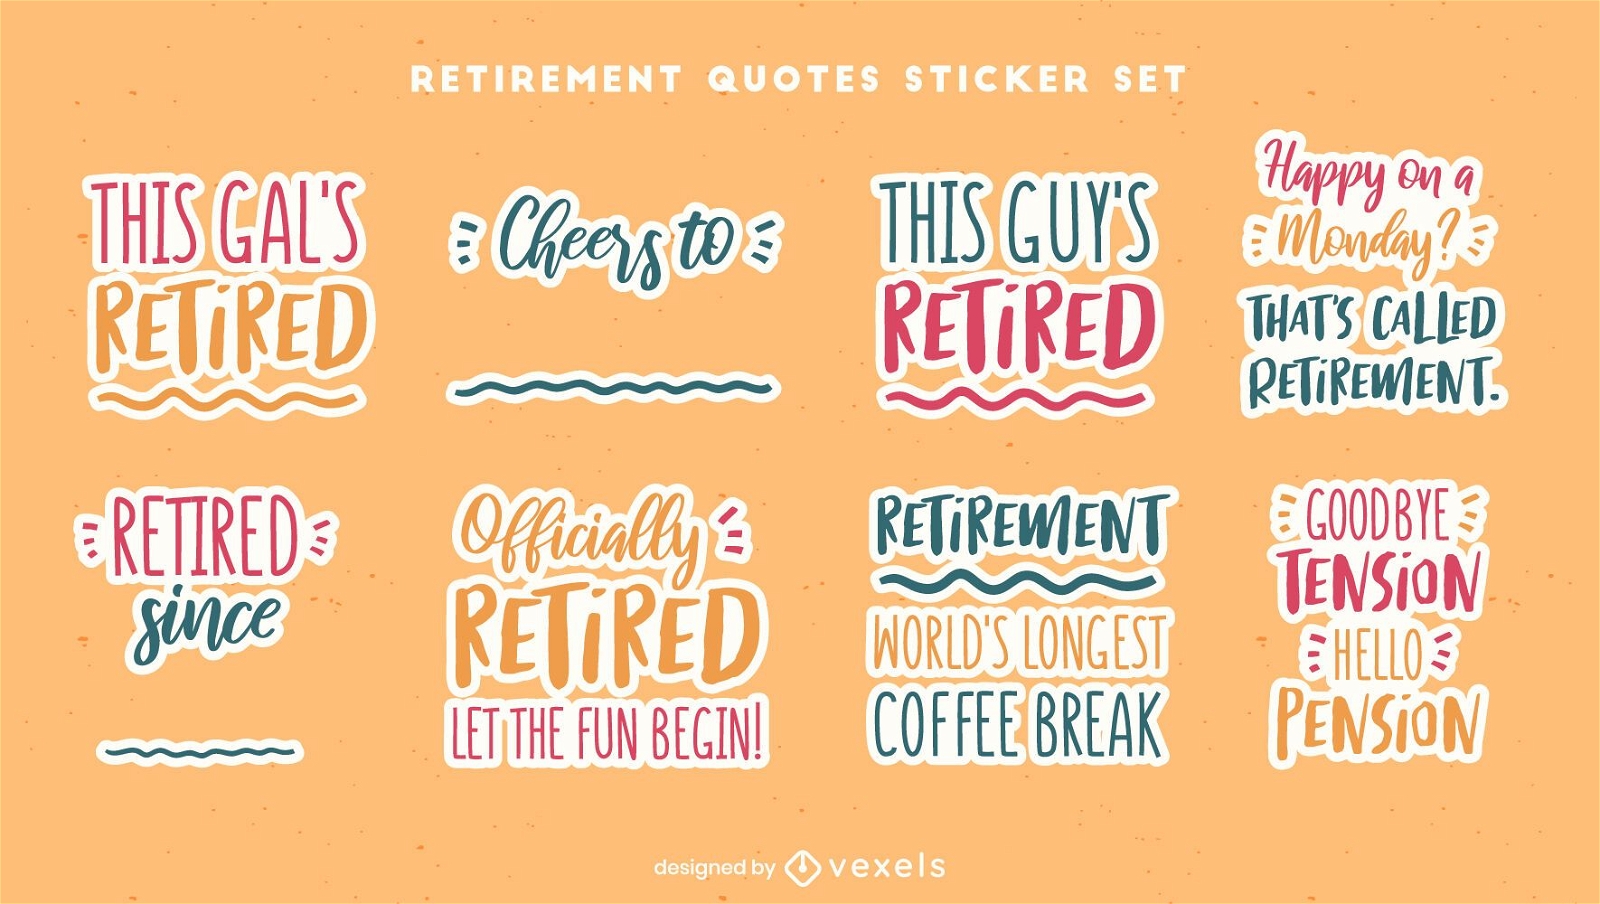 Happy retirement sticker quote set